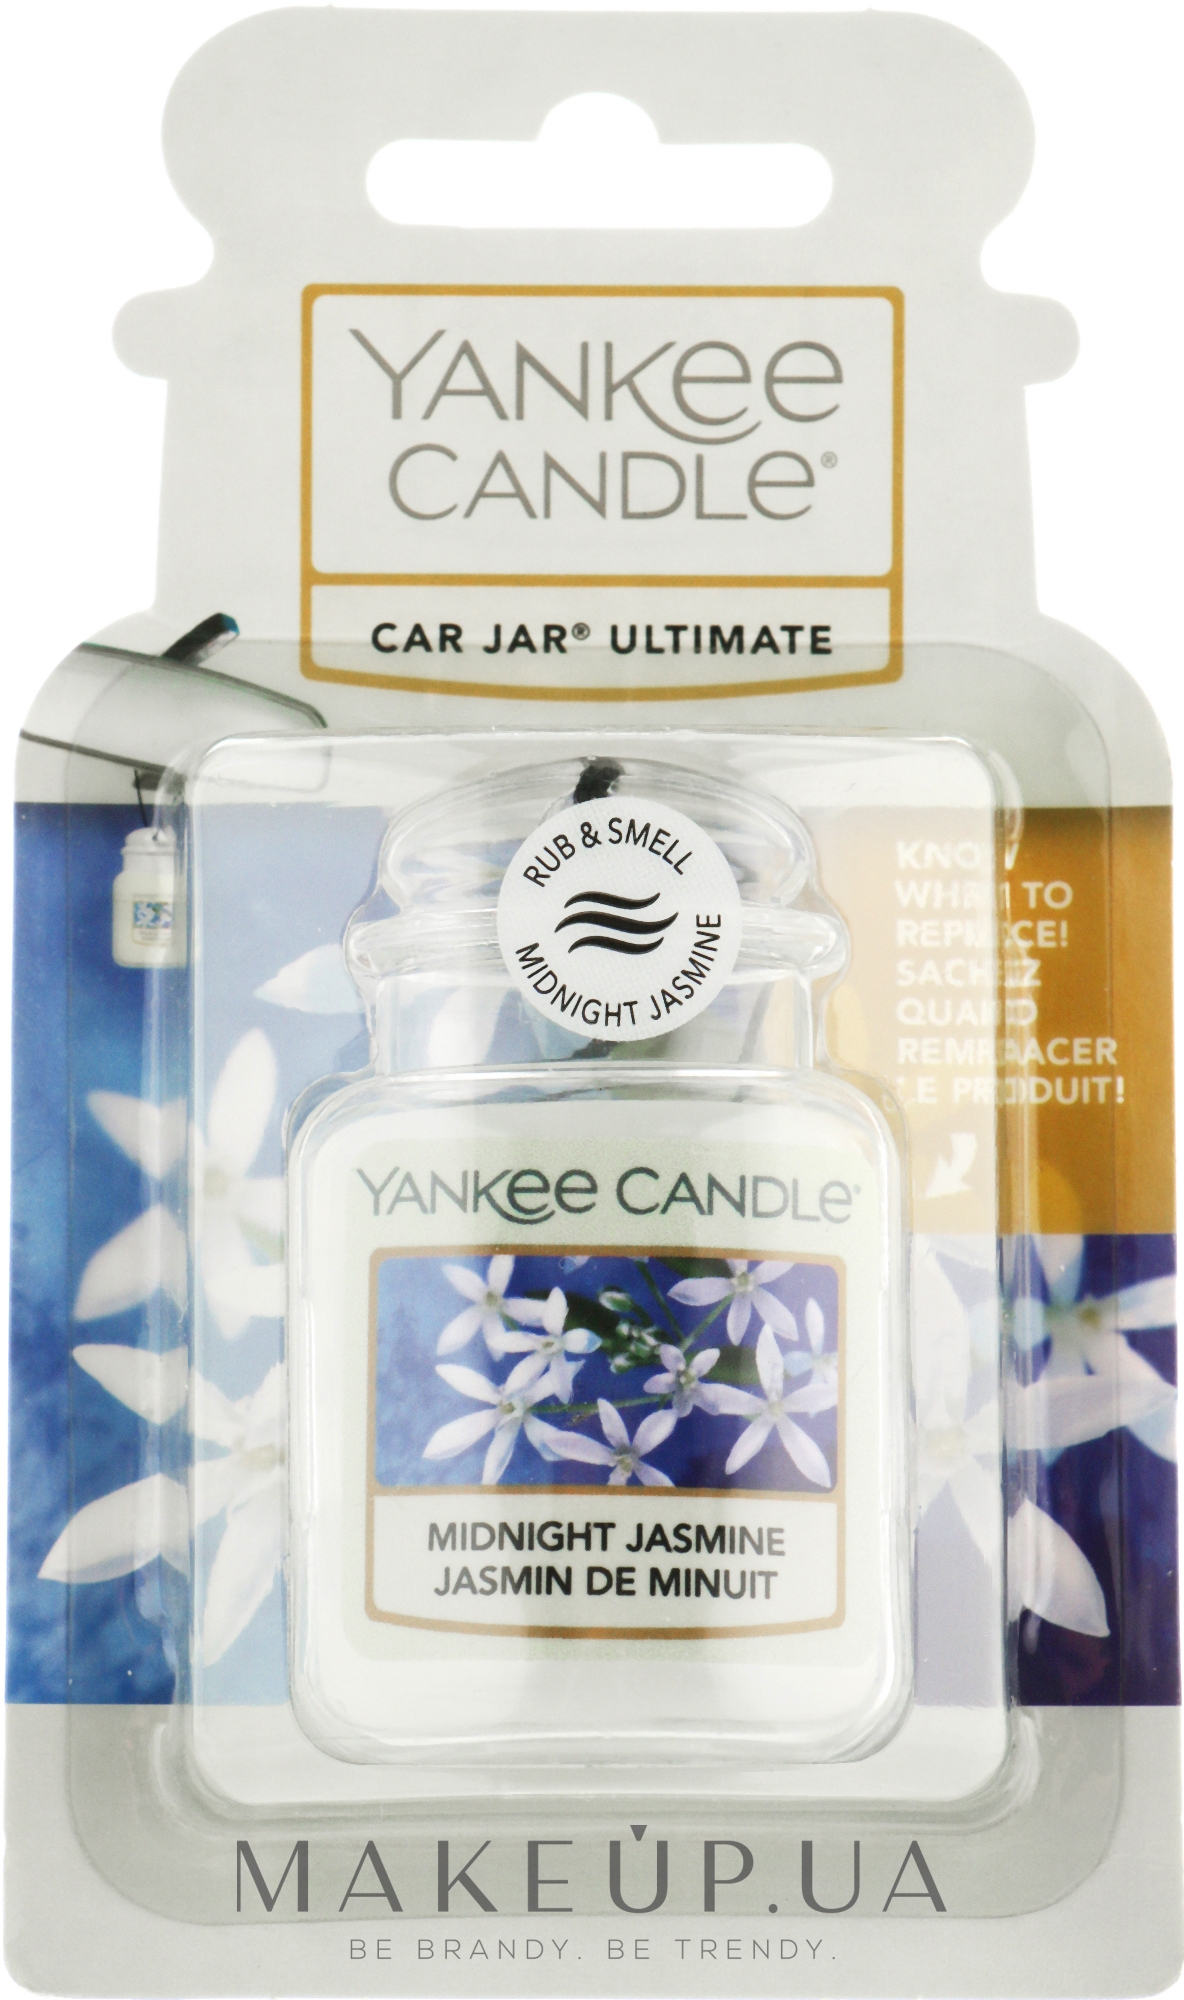 Car jar Ultimate Jasmin de minuit - YANKEE CANDLE 